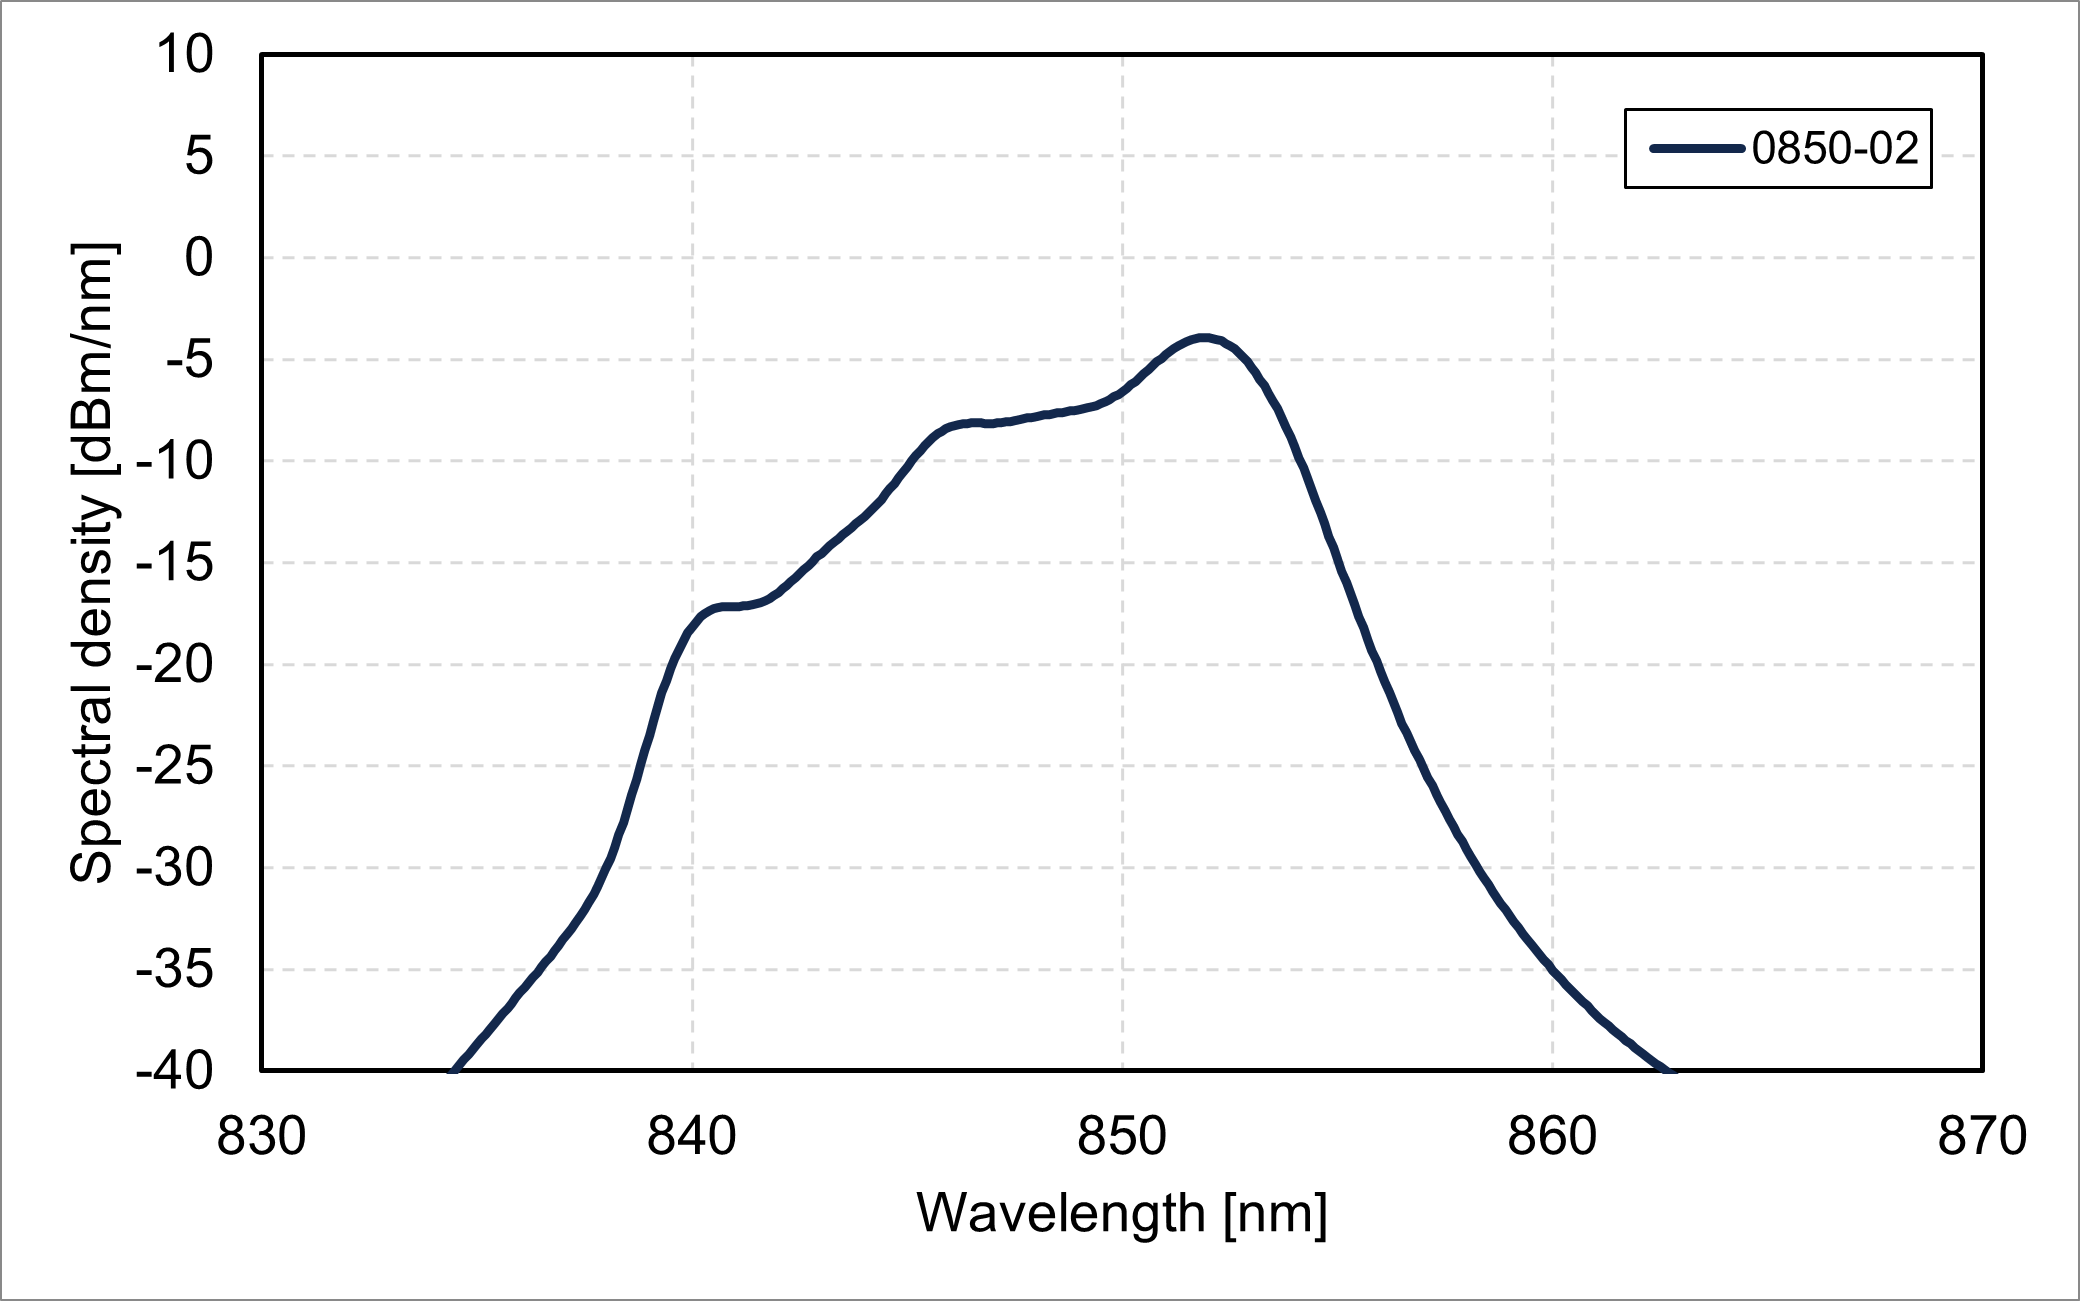 Spectral density vs. wavelength (0850-02)